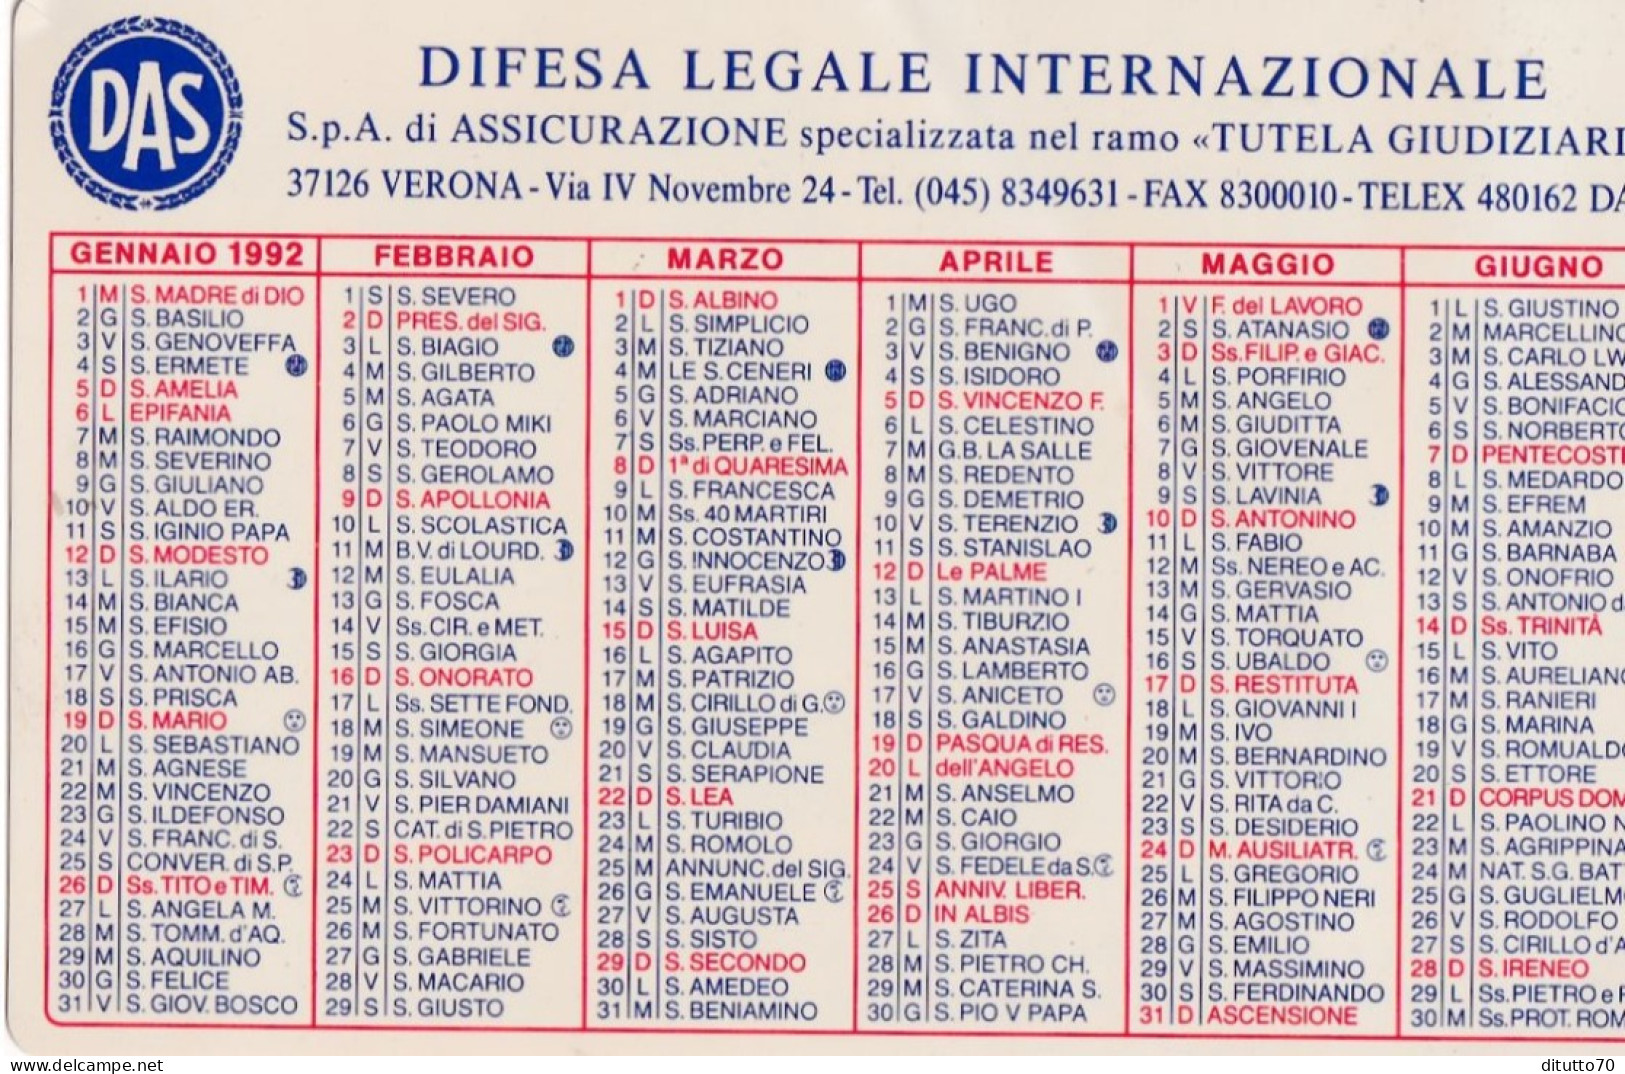 Calendarietto - DAS - Difesa Legale Internazionale - Verona - Anno 1992 - Petit Format : 1991-00